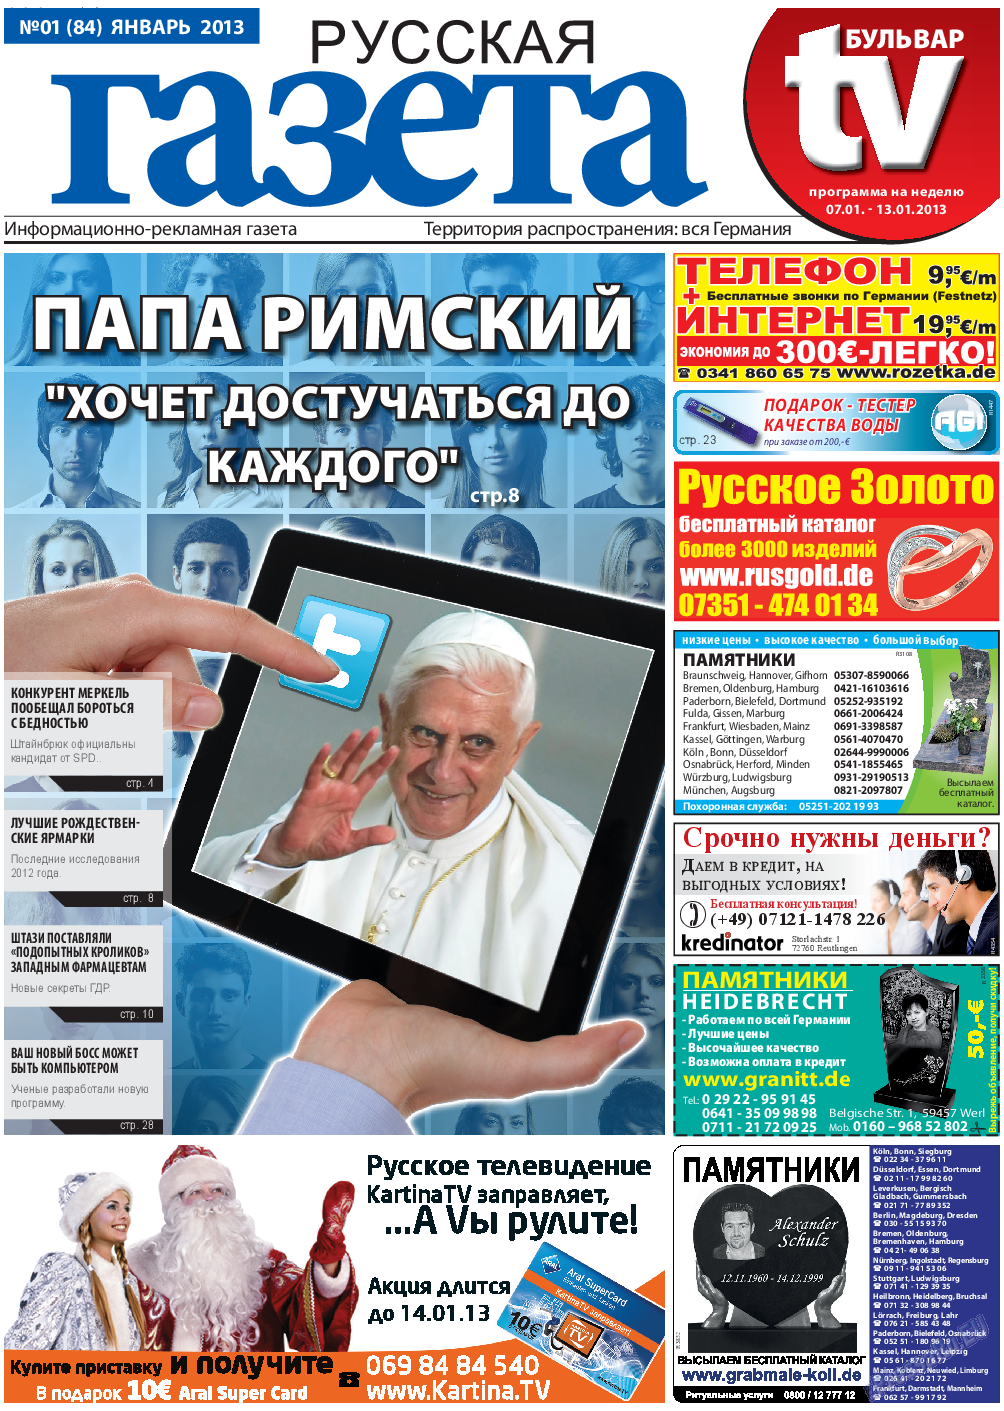 Русская Газета, газета. 2013 №1 стр.1